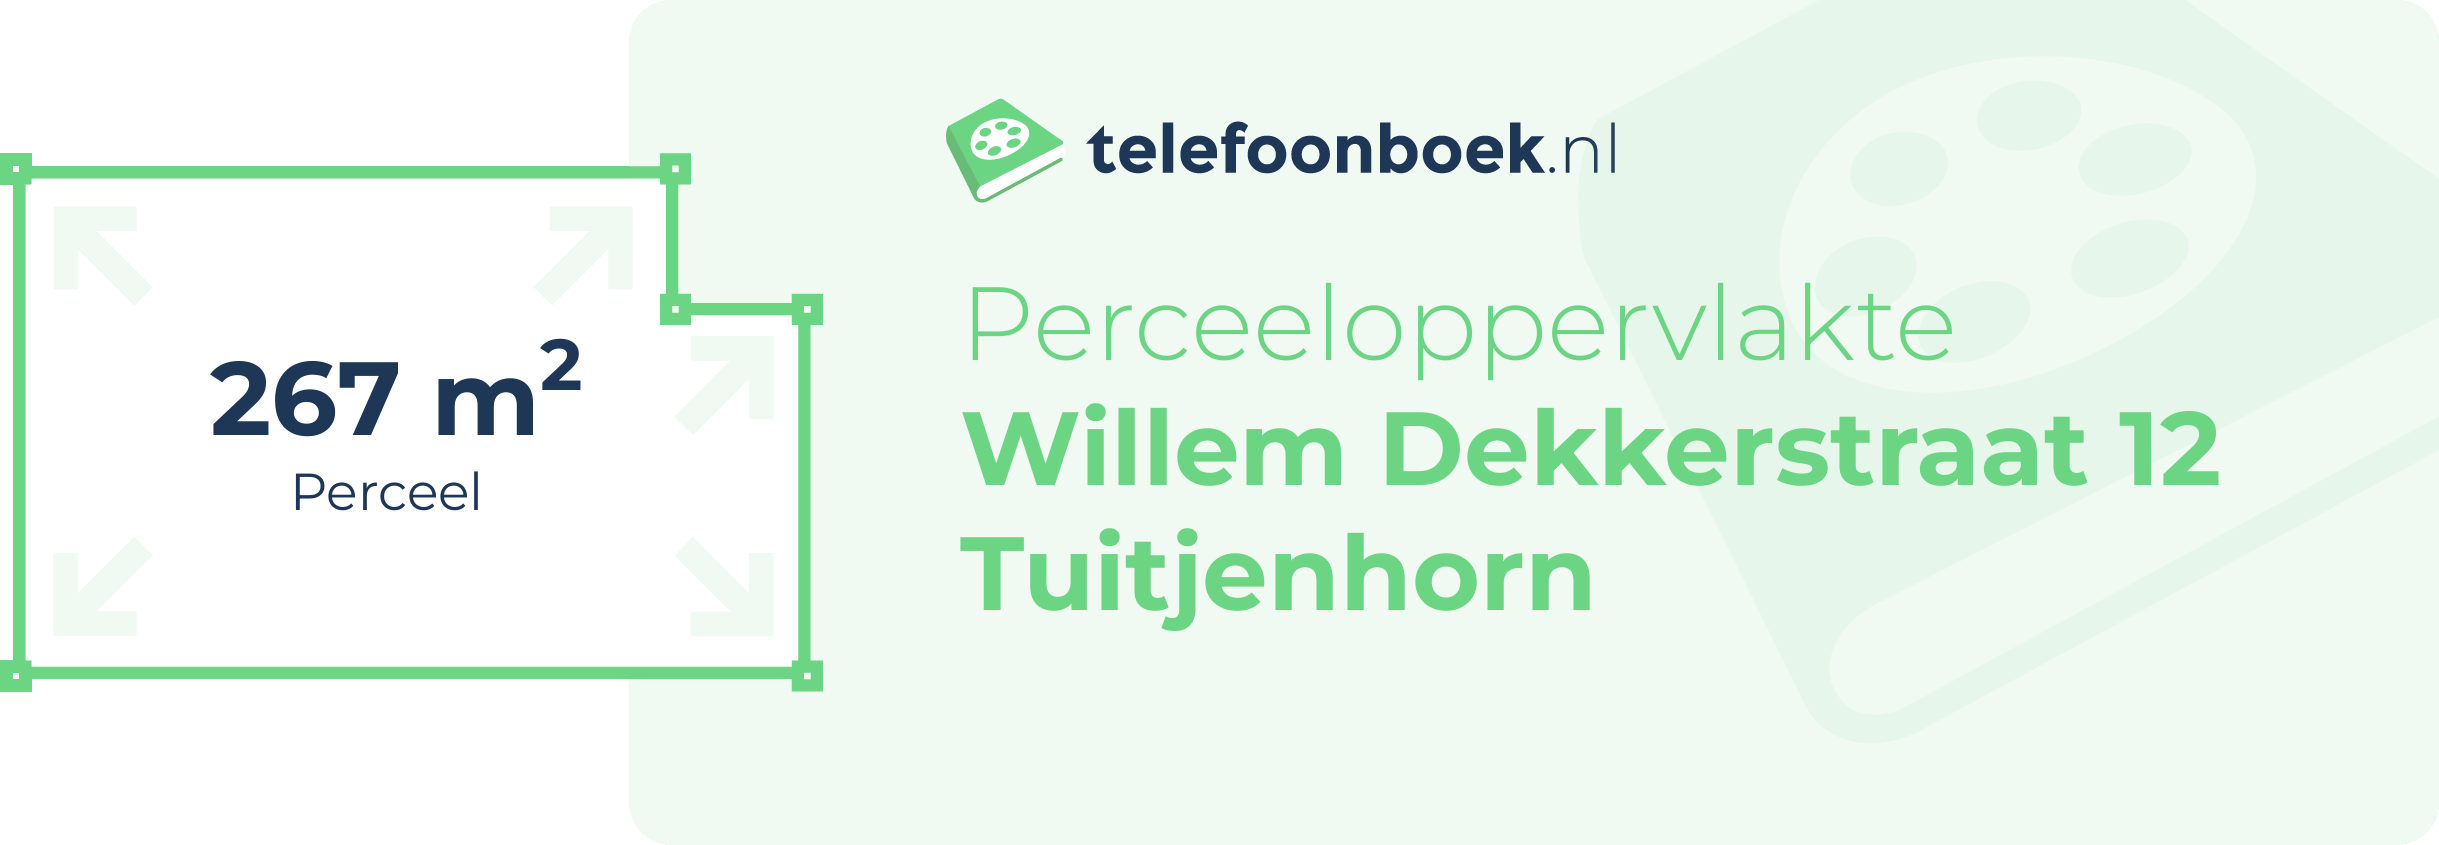 Perceeloppervlakte Willem Dekkerstraat 12 Tuitjenhorn